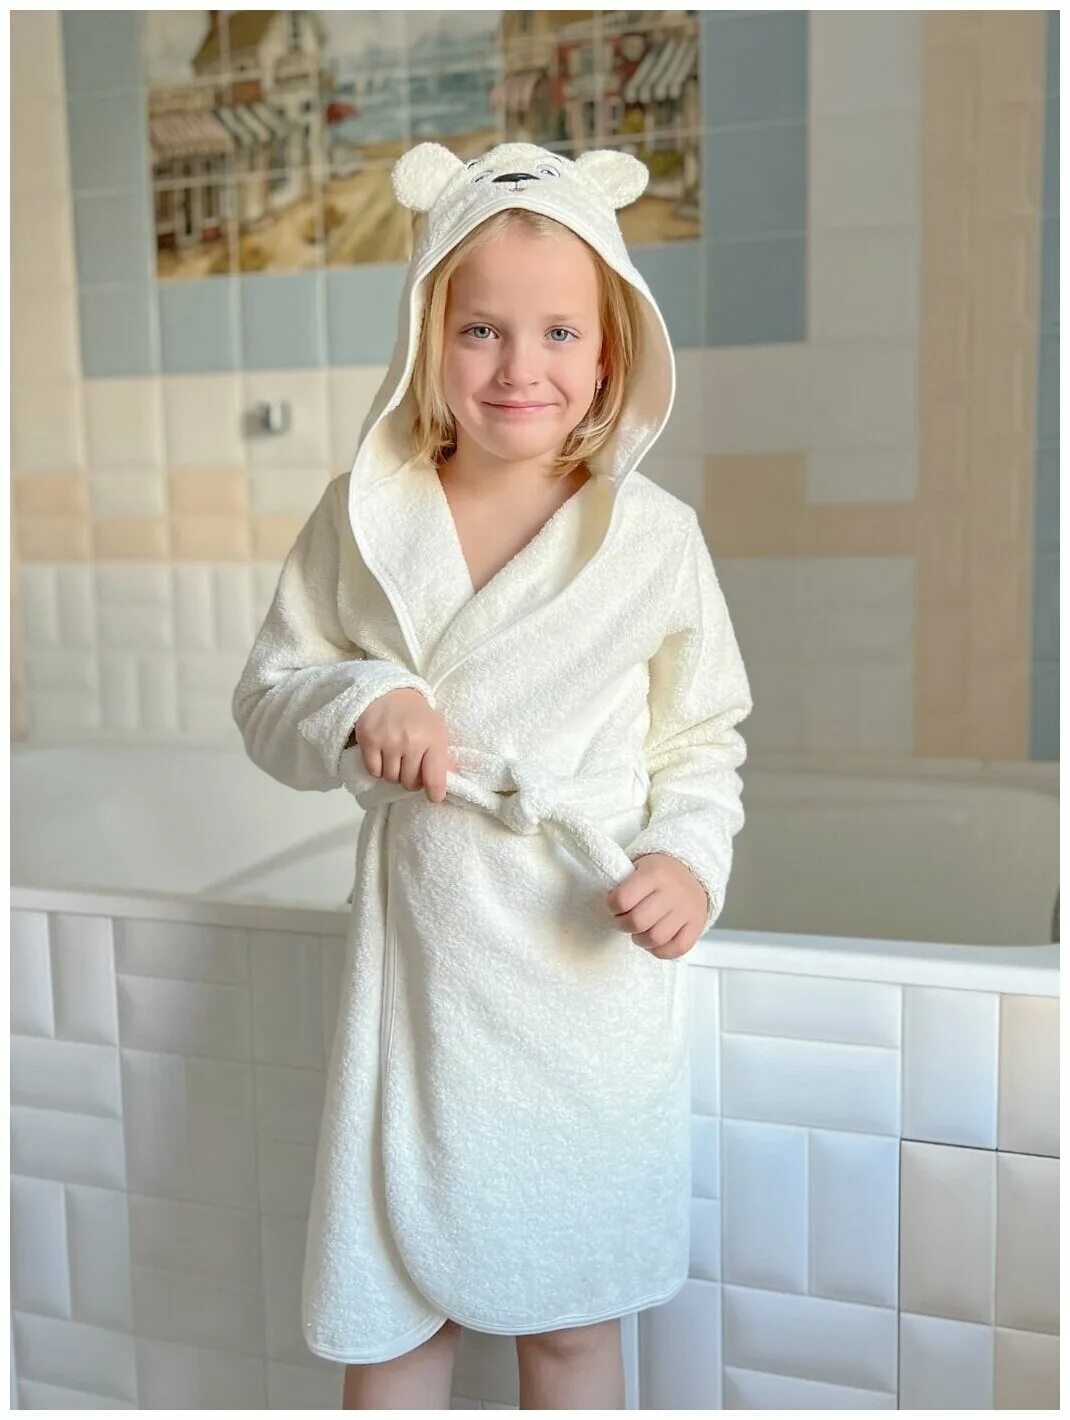 Ad-756 халат махровый мини adora. Махровый халат Лео. Халат детский махровый. Детский банный халат. Купить халат для бани